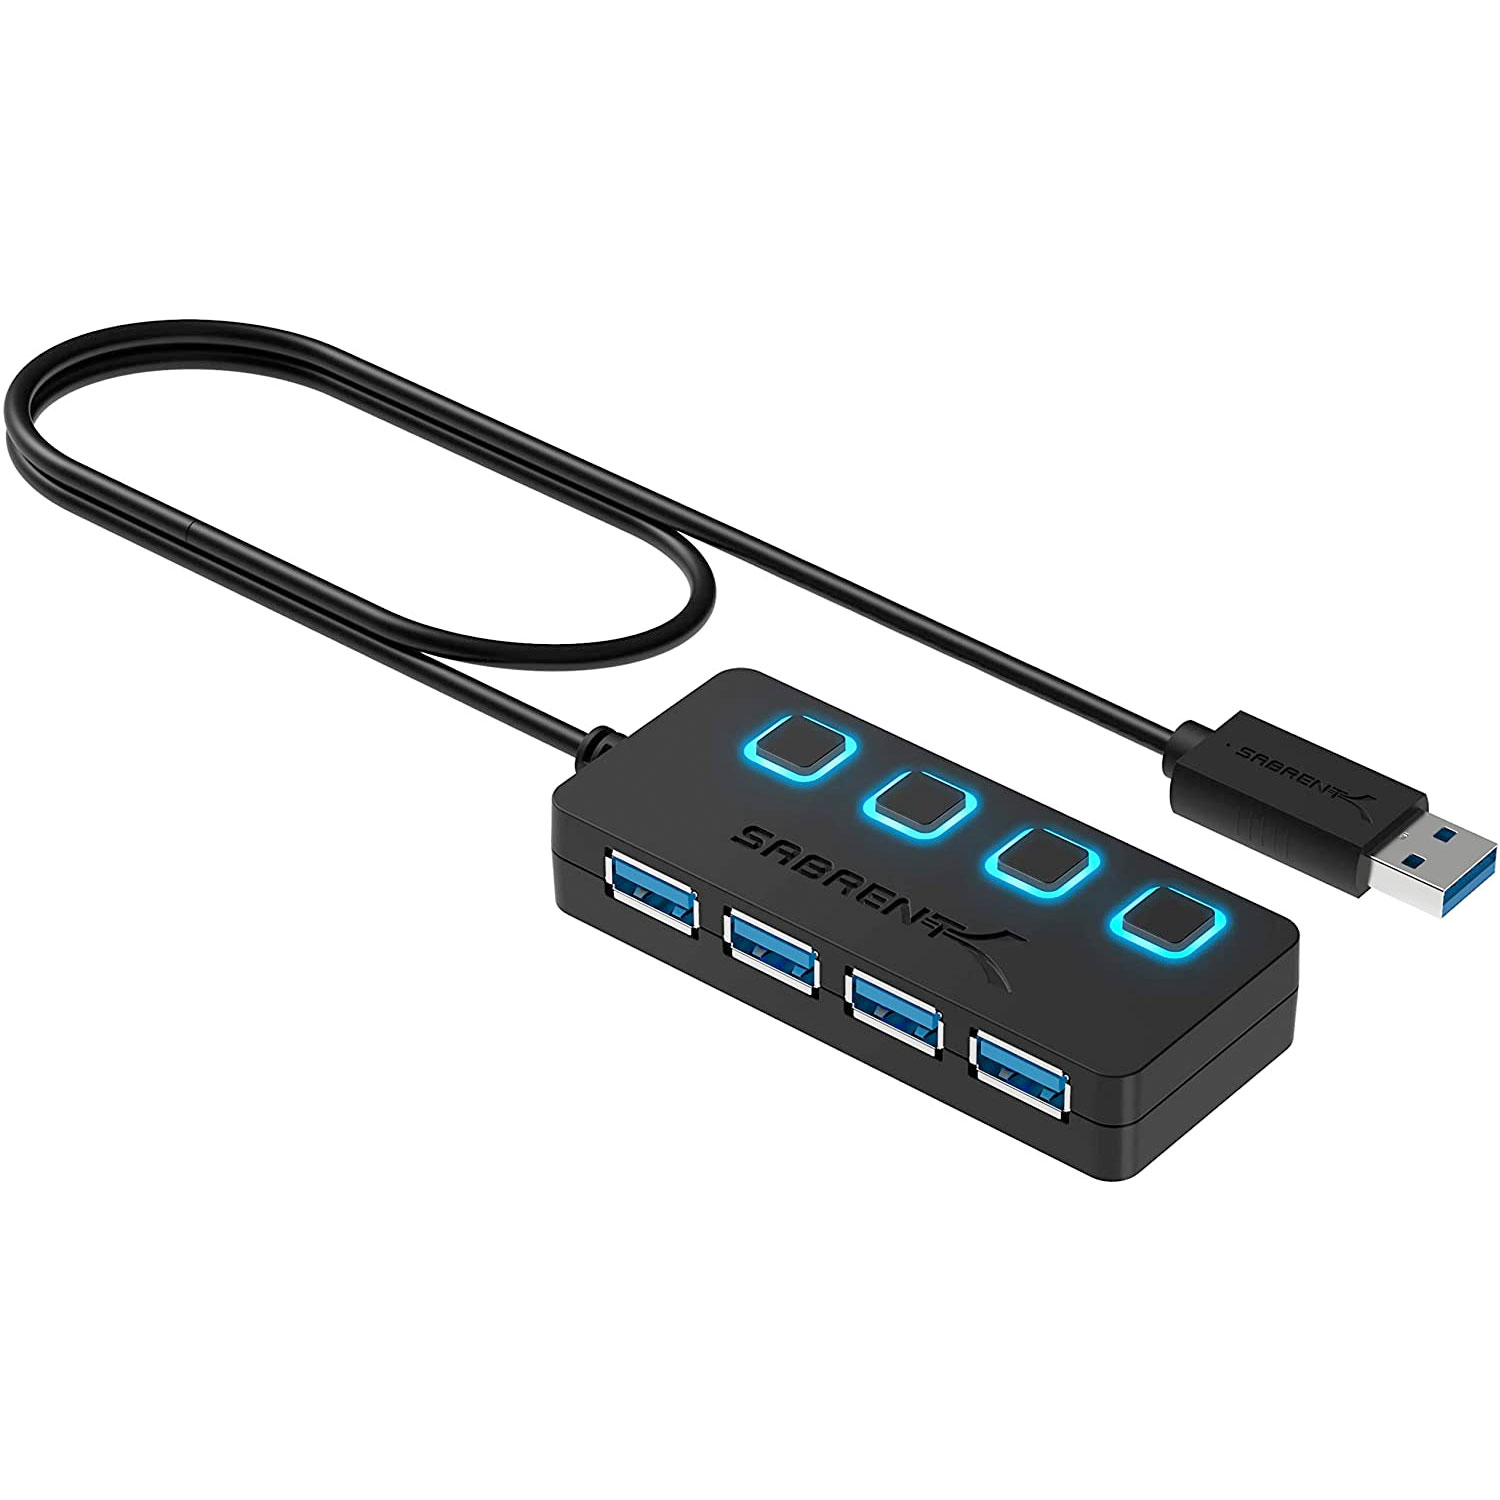 Amazon：Sabrent 4-Port USB 3.0 Hub只賣$6.99